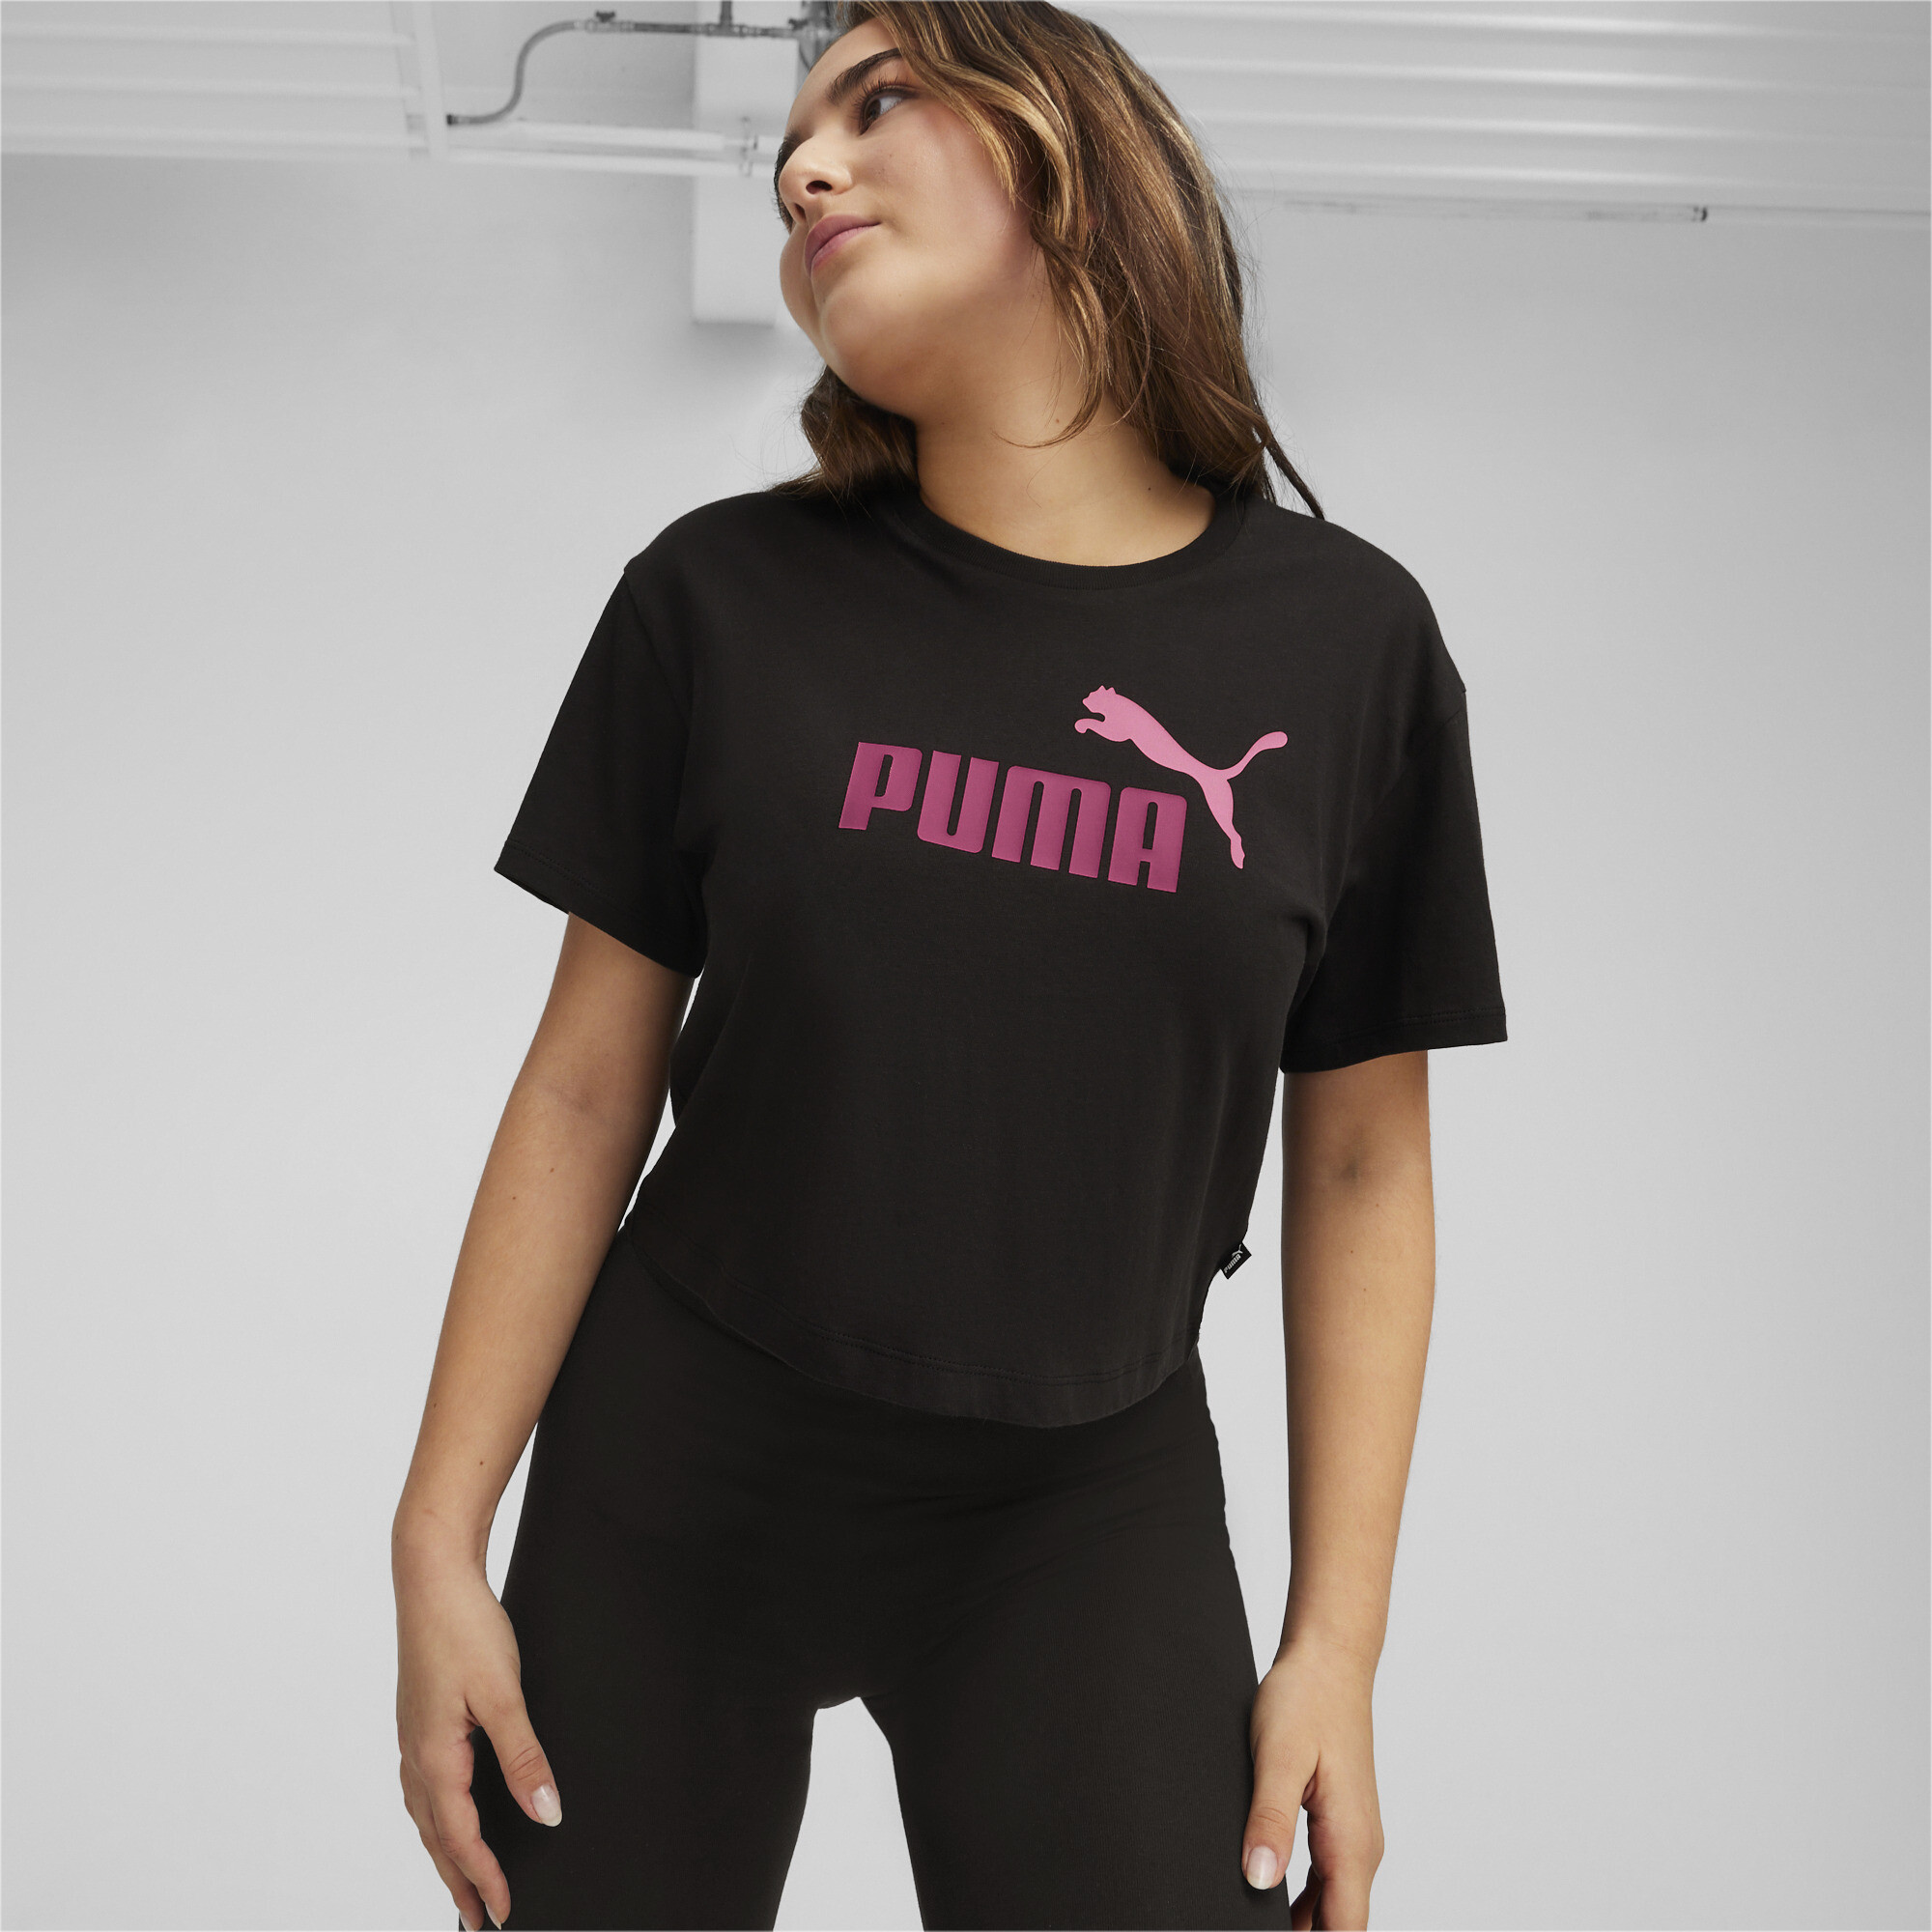 Puma Girls Logo Cropped Tee Youth, Black, Size 16, Shop